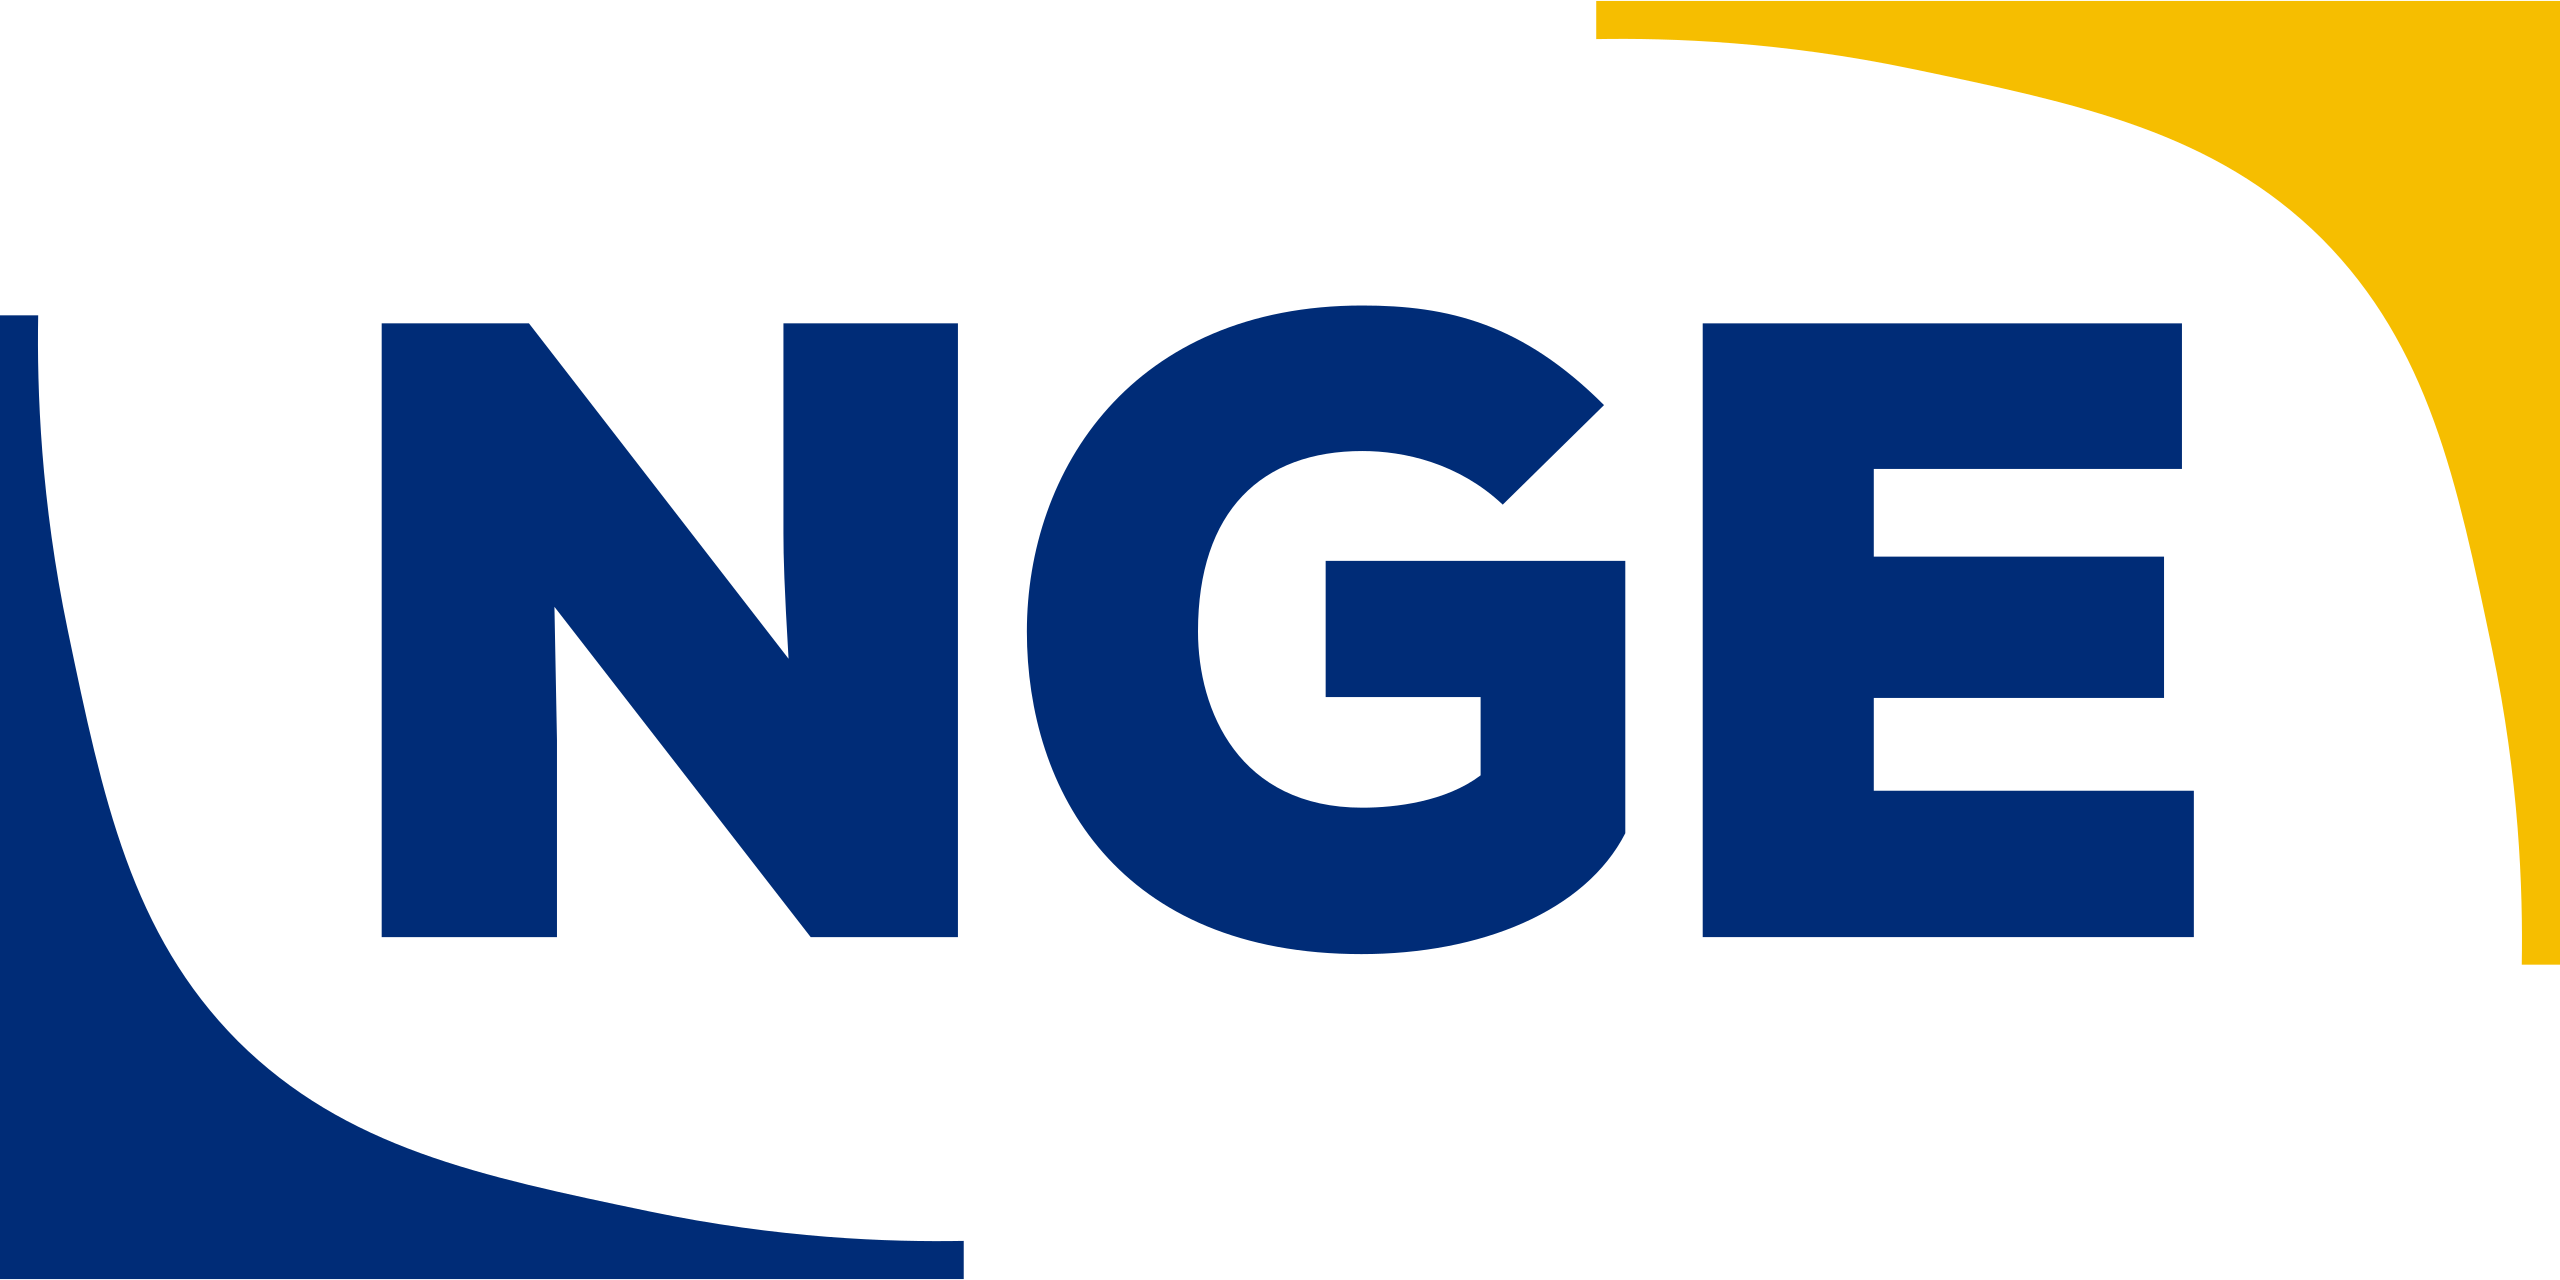 Logo-NGE